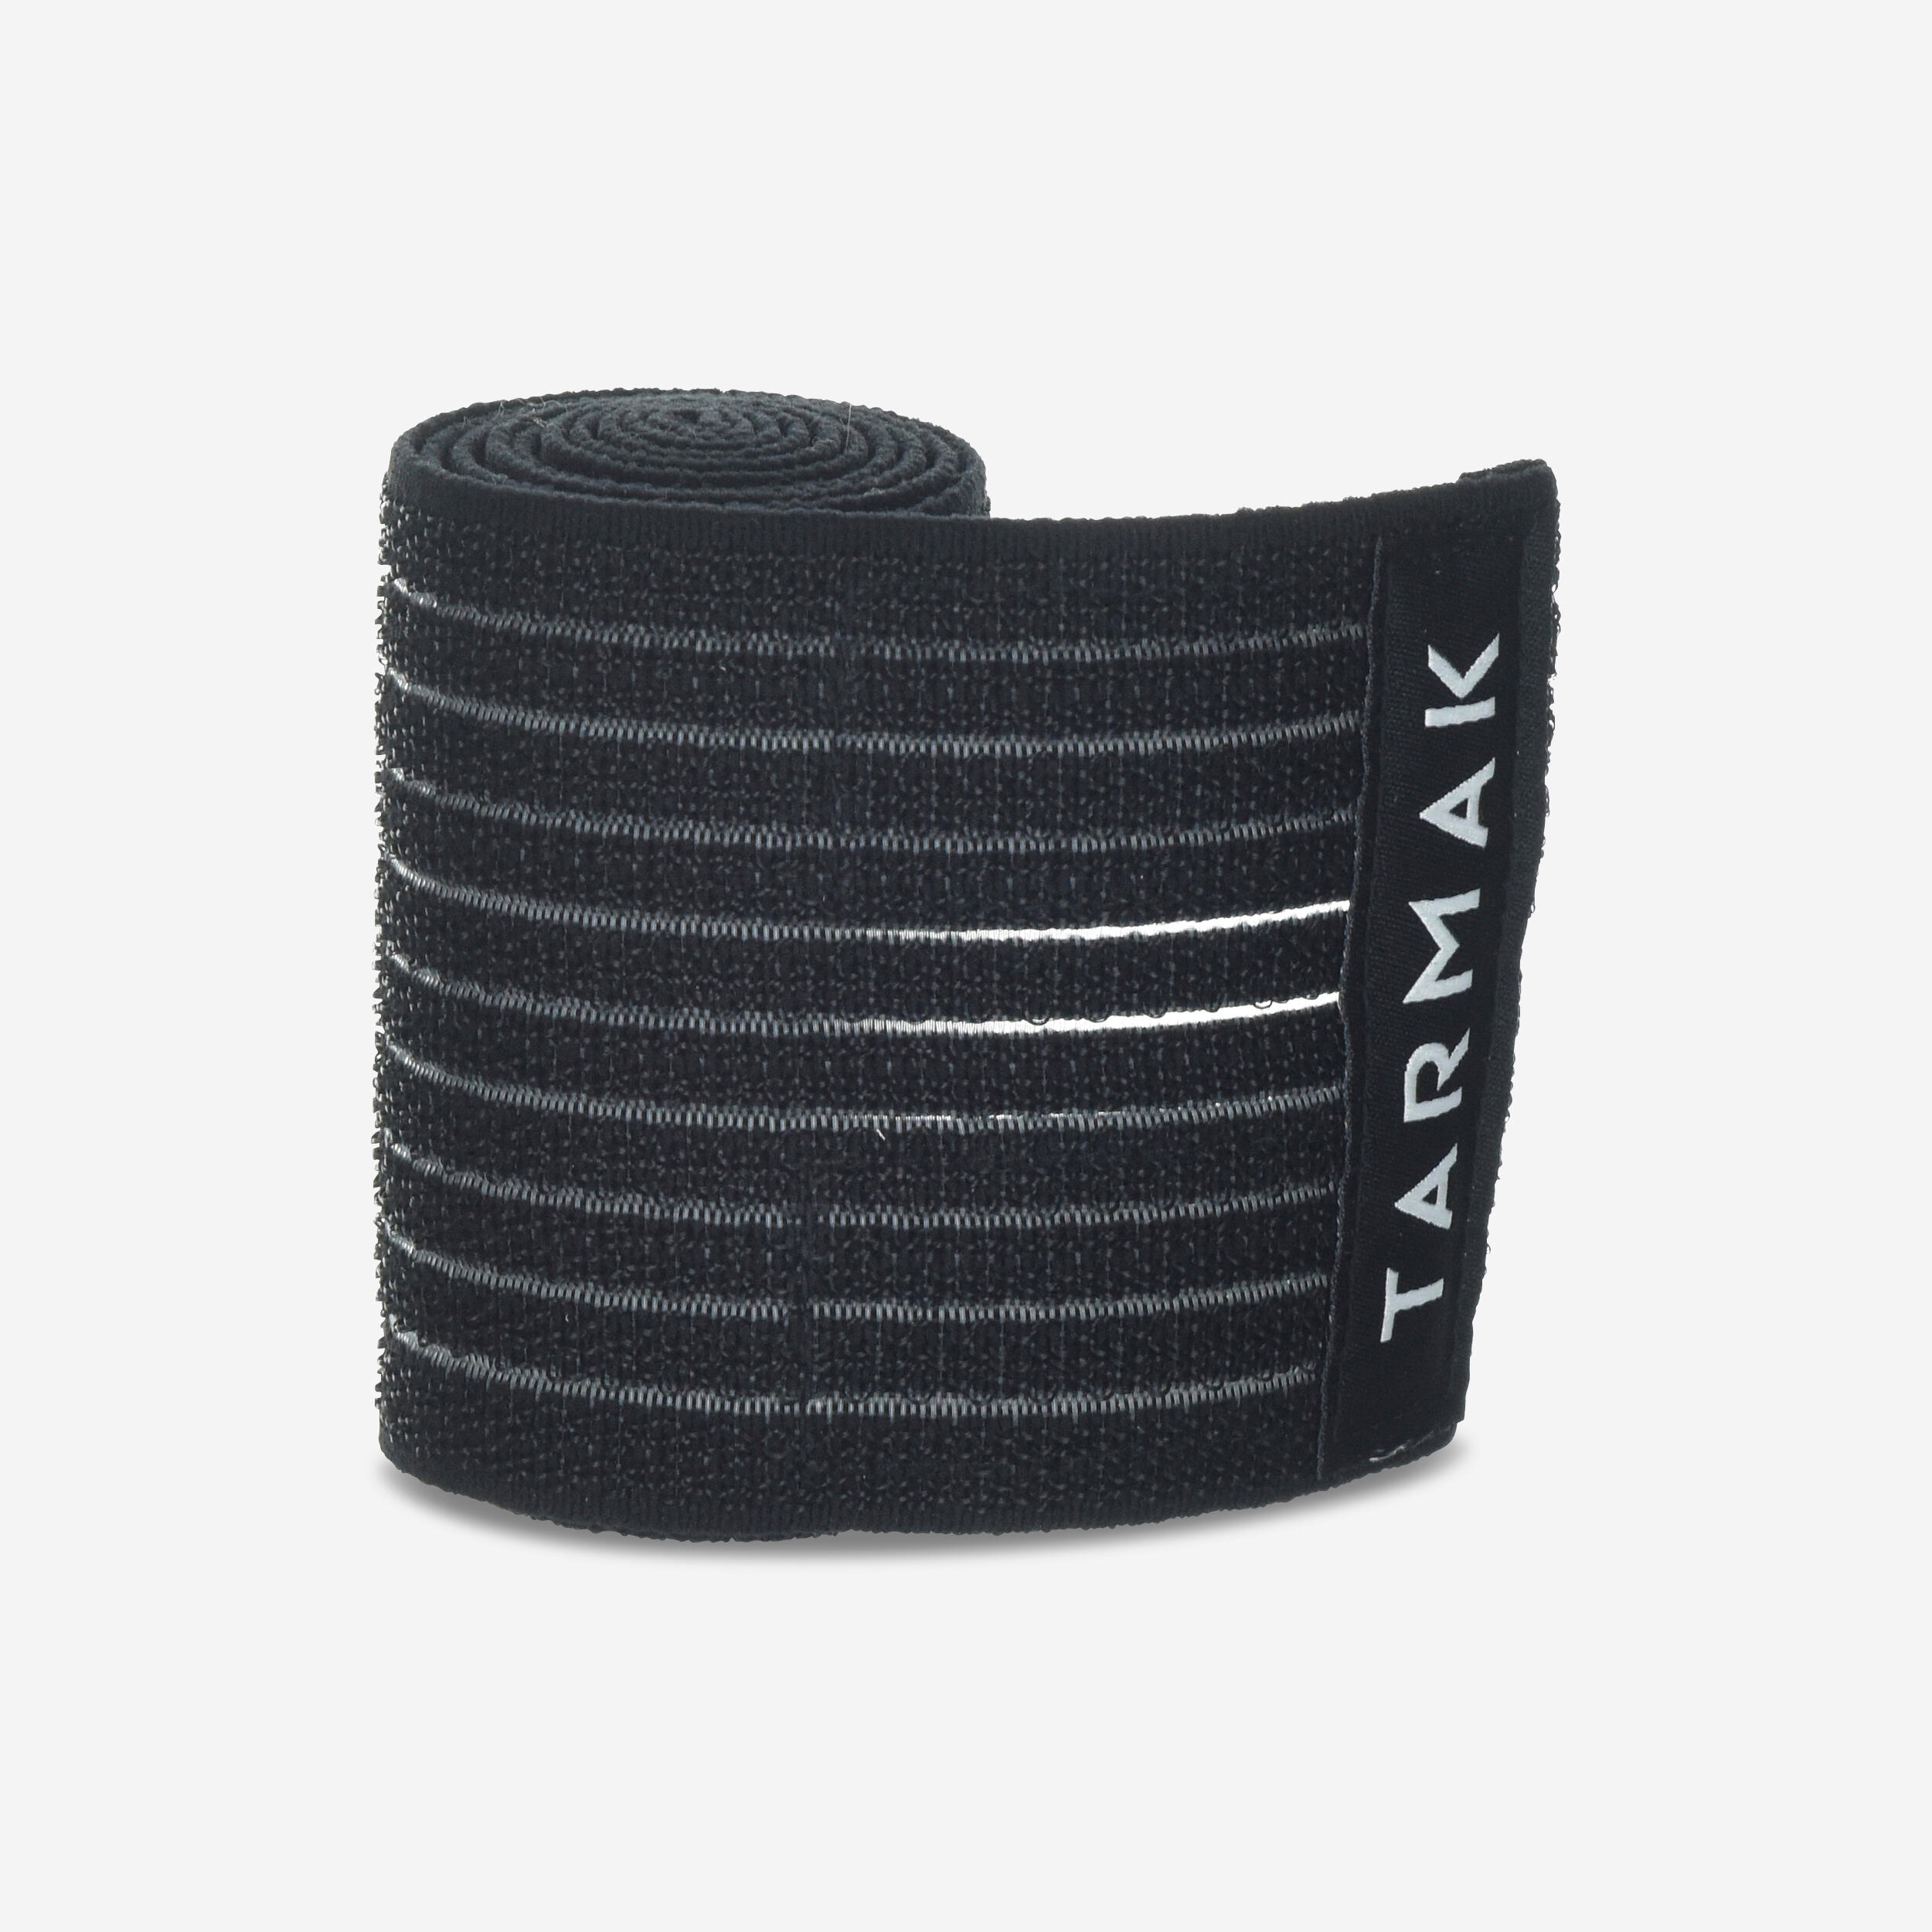 TARMAK 8 cm x 1.2 m Reusable Support Strap - Black